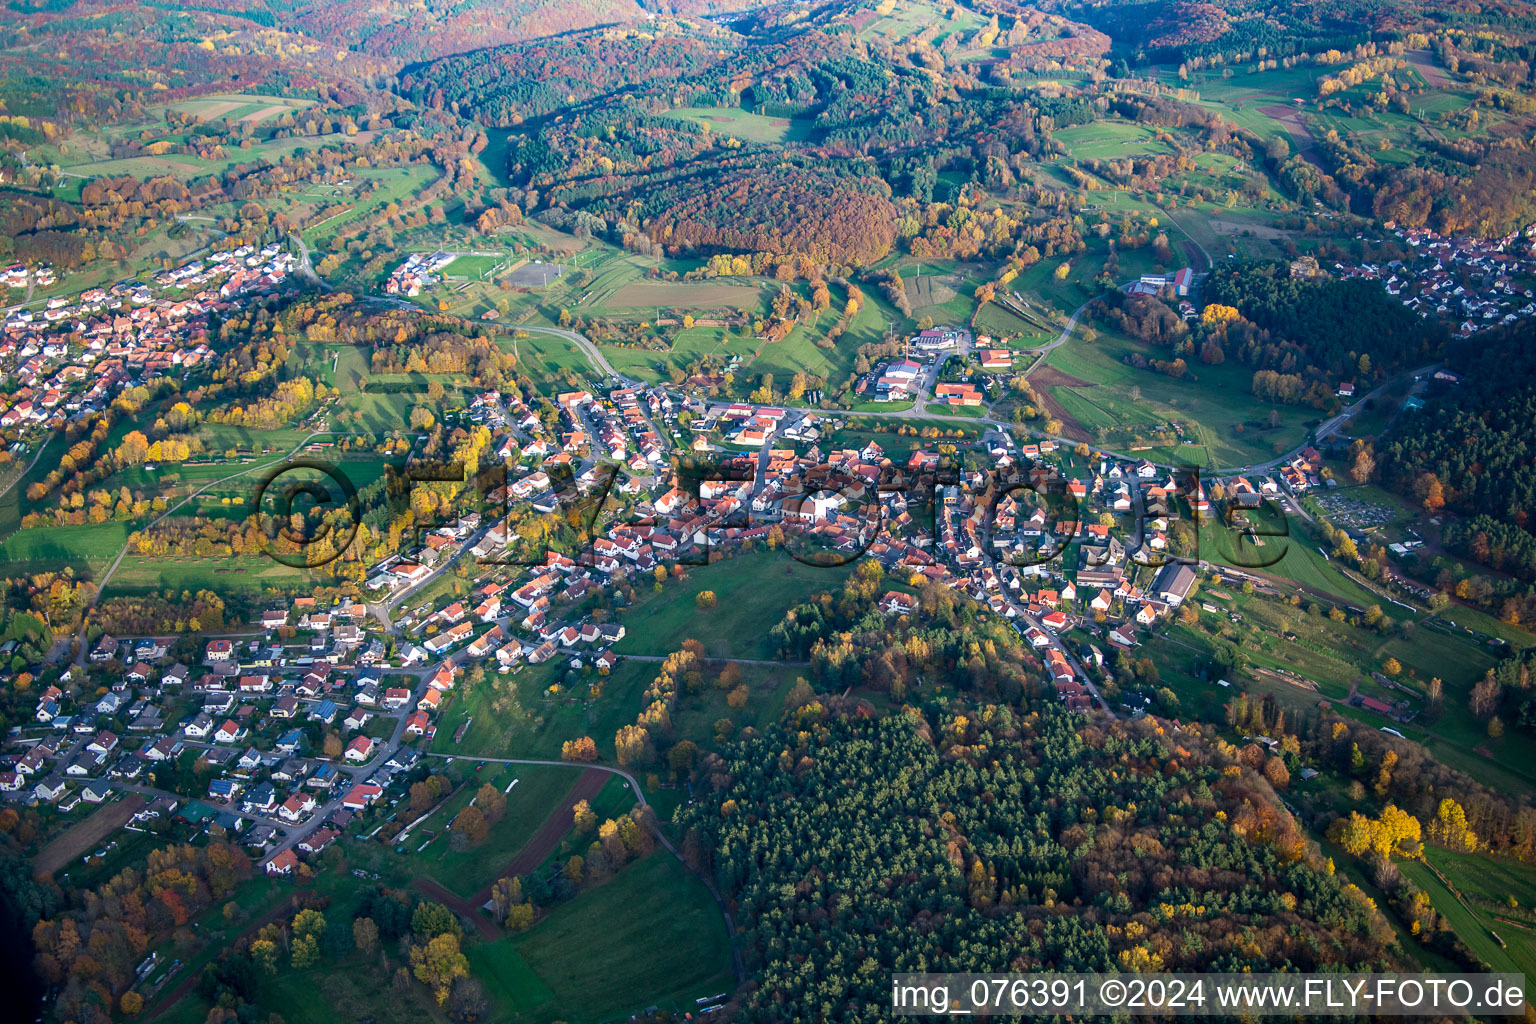 District Gossersweiler in Gossersweiler-Stein in the state Rhineland-Palatinate, Germany